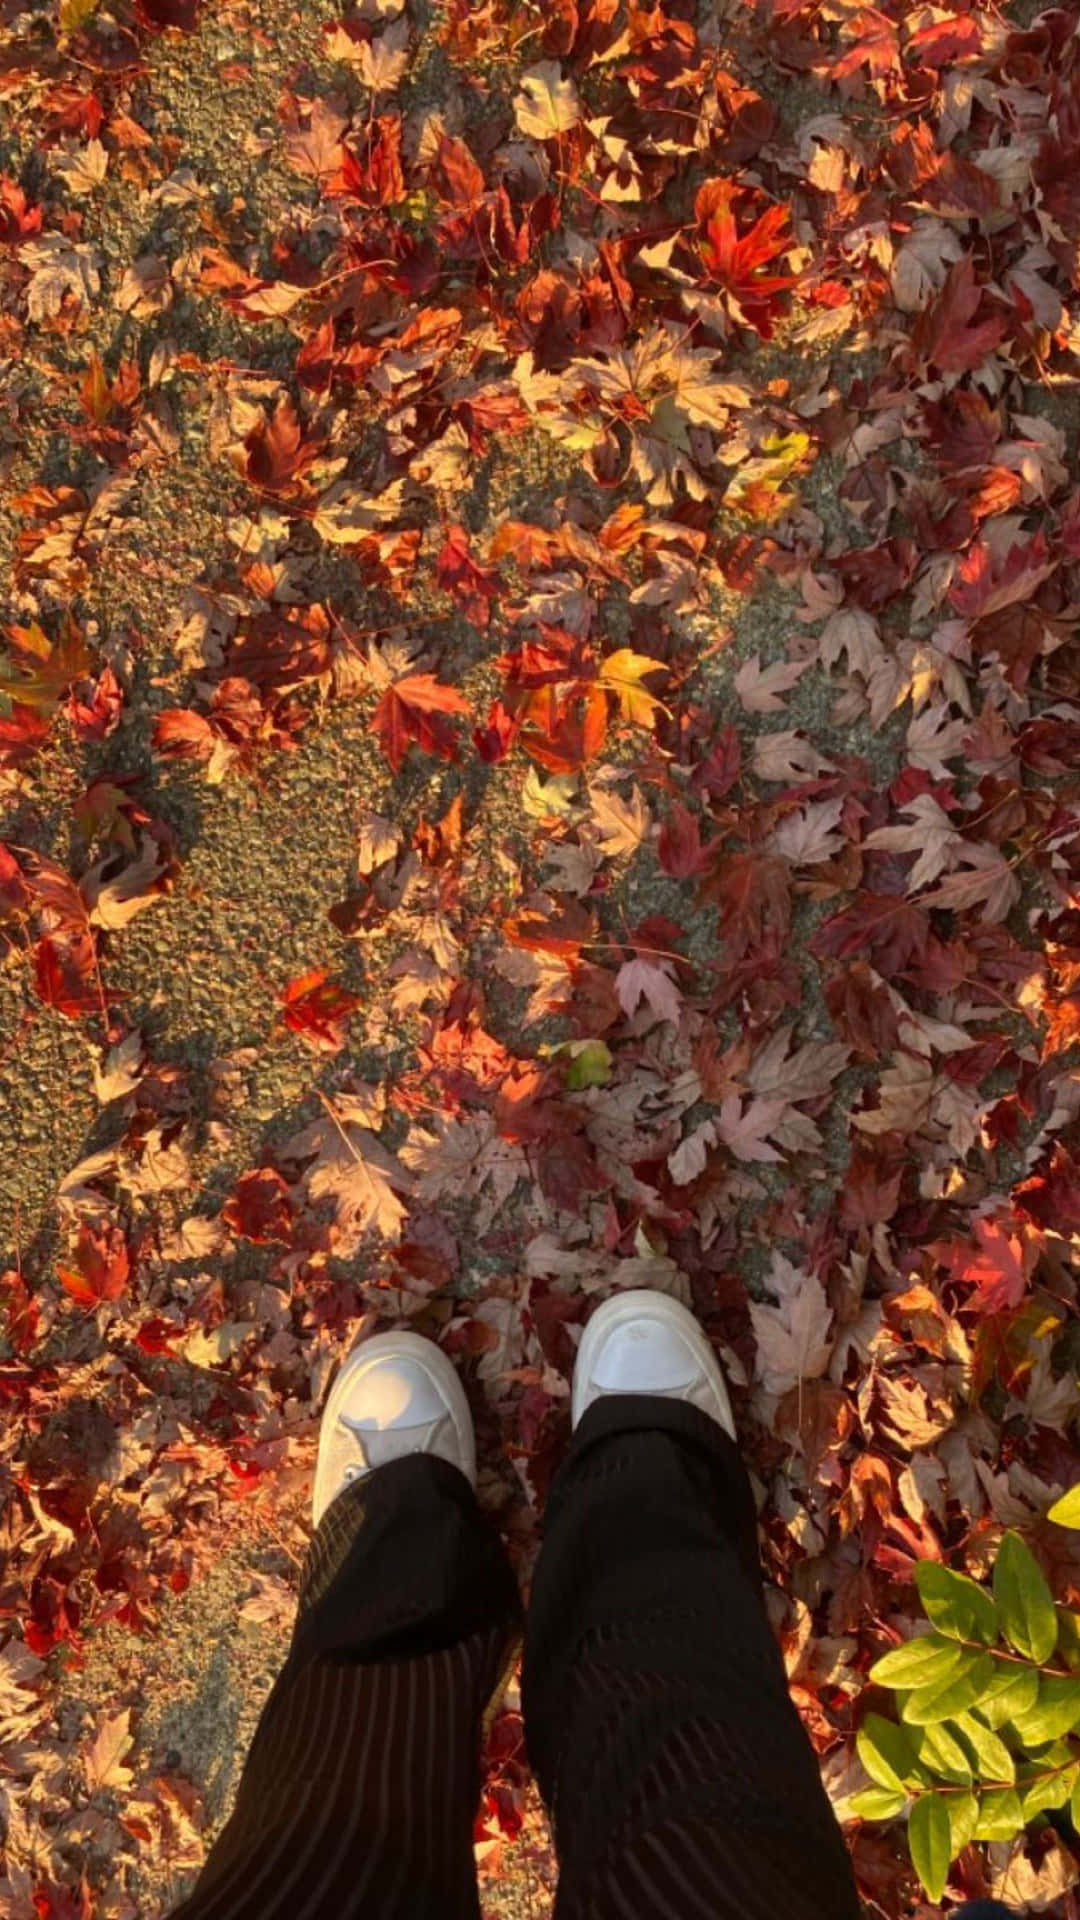 Autumn Feeton Fallen Leaves Wallpaper